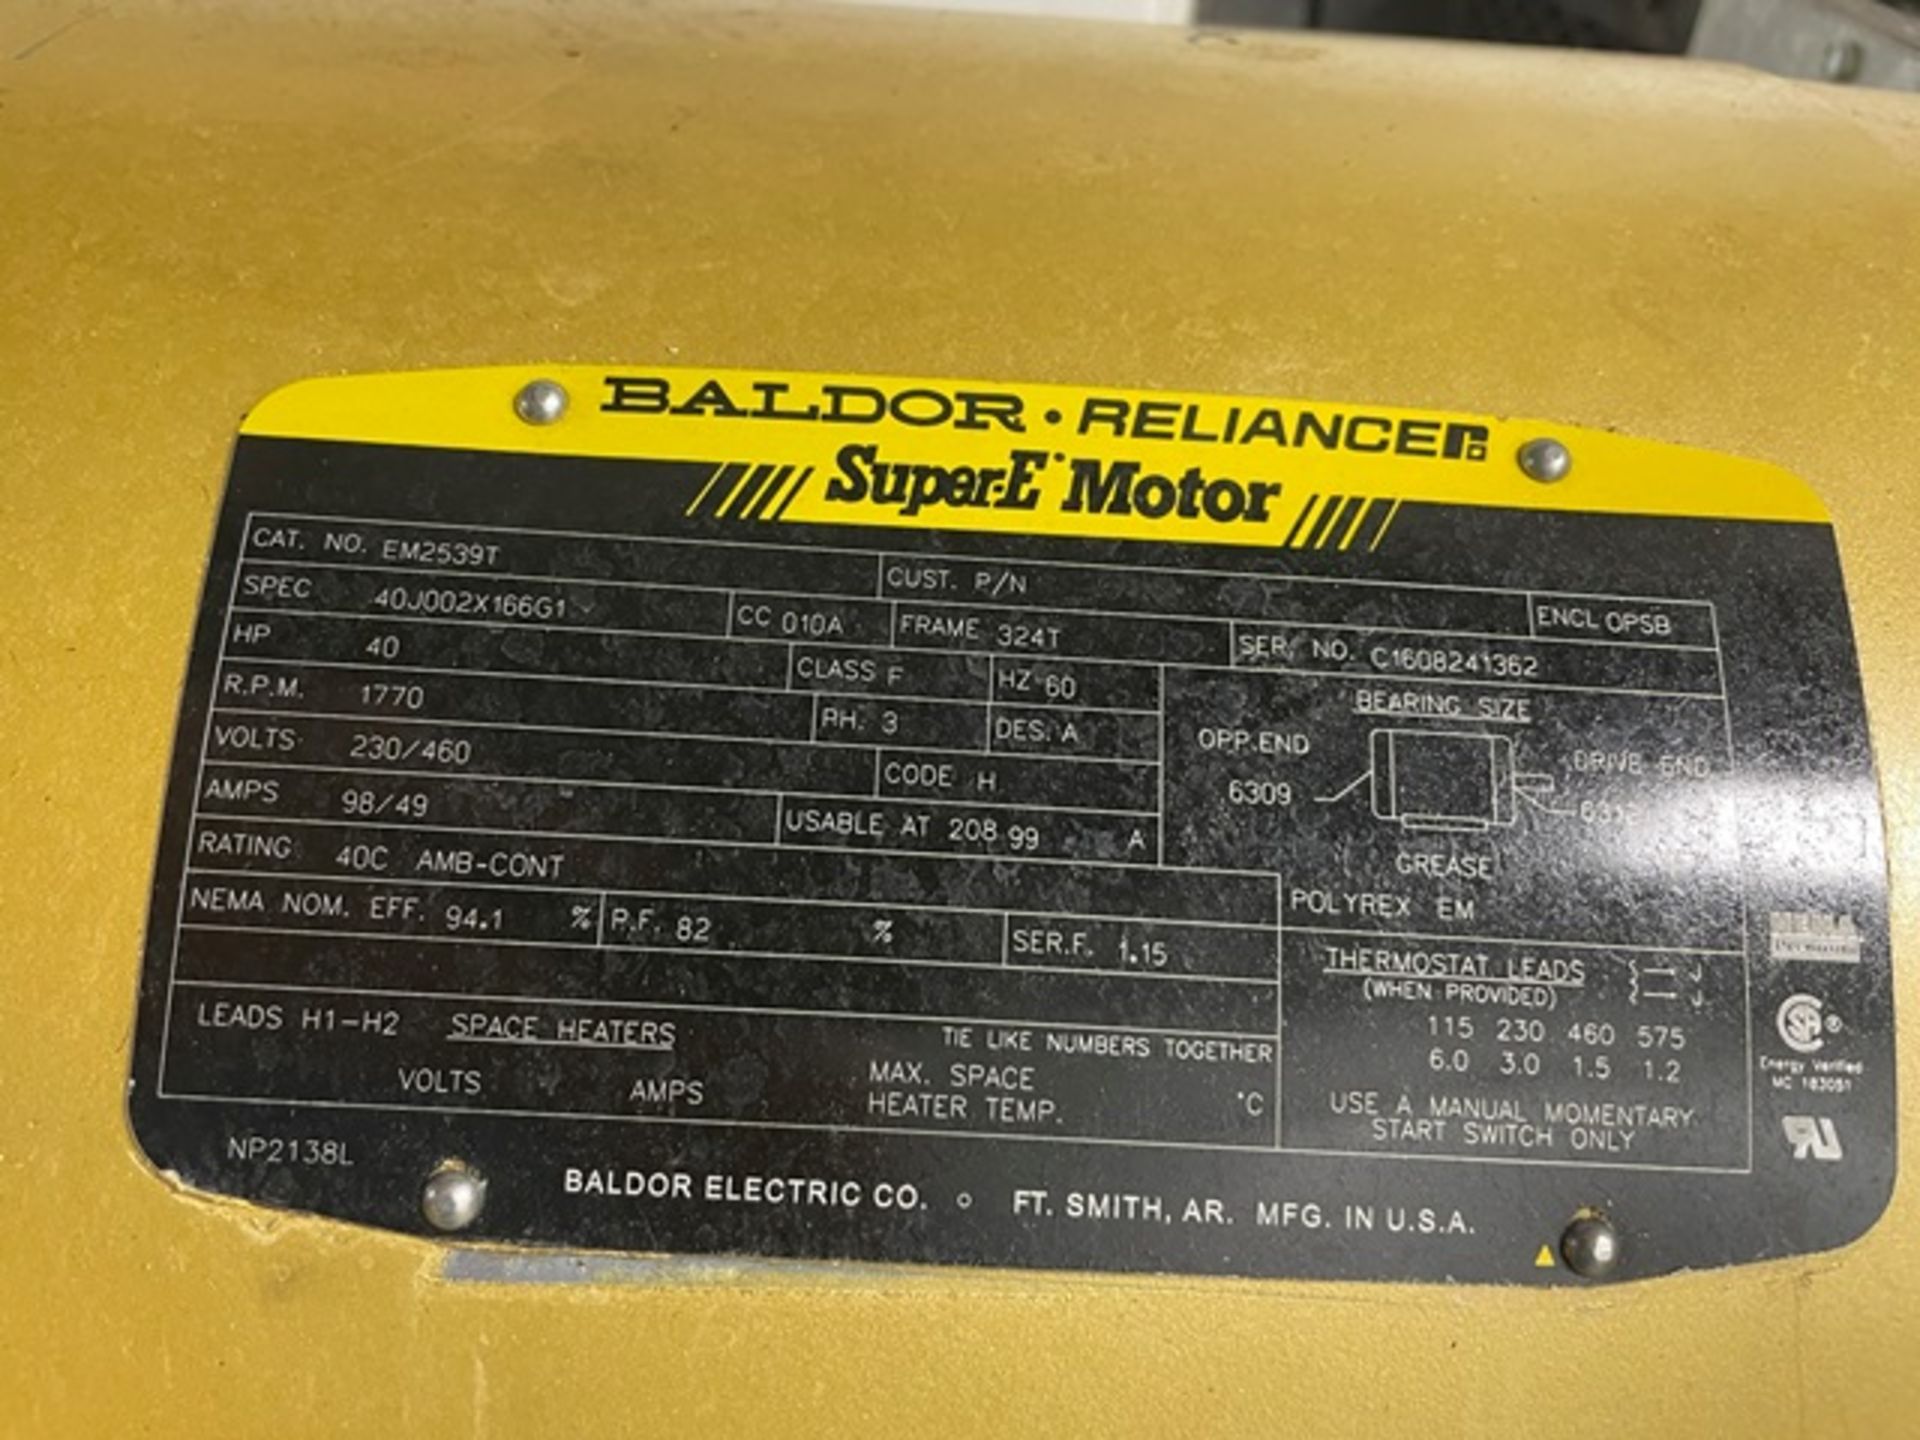 Baldor 40 HP Motor & Blower Unit, Includes Powerflex 753 Control - Image 2 of 2